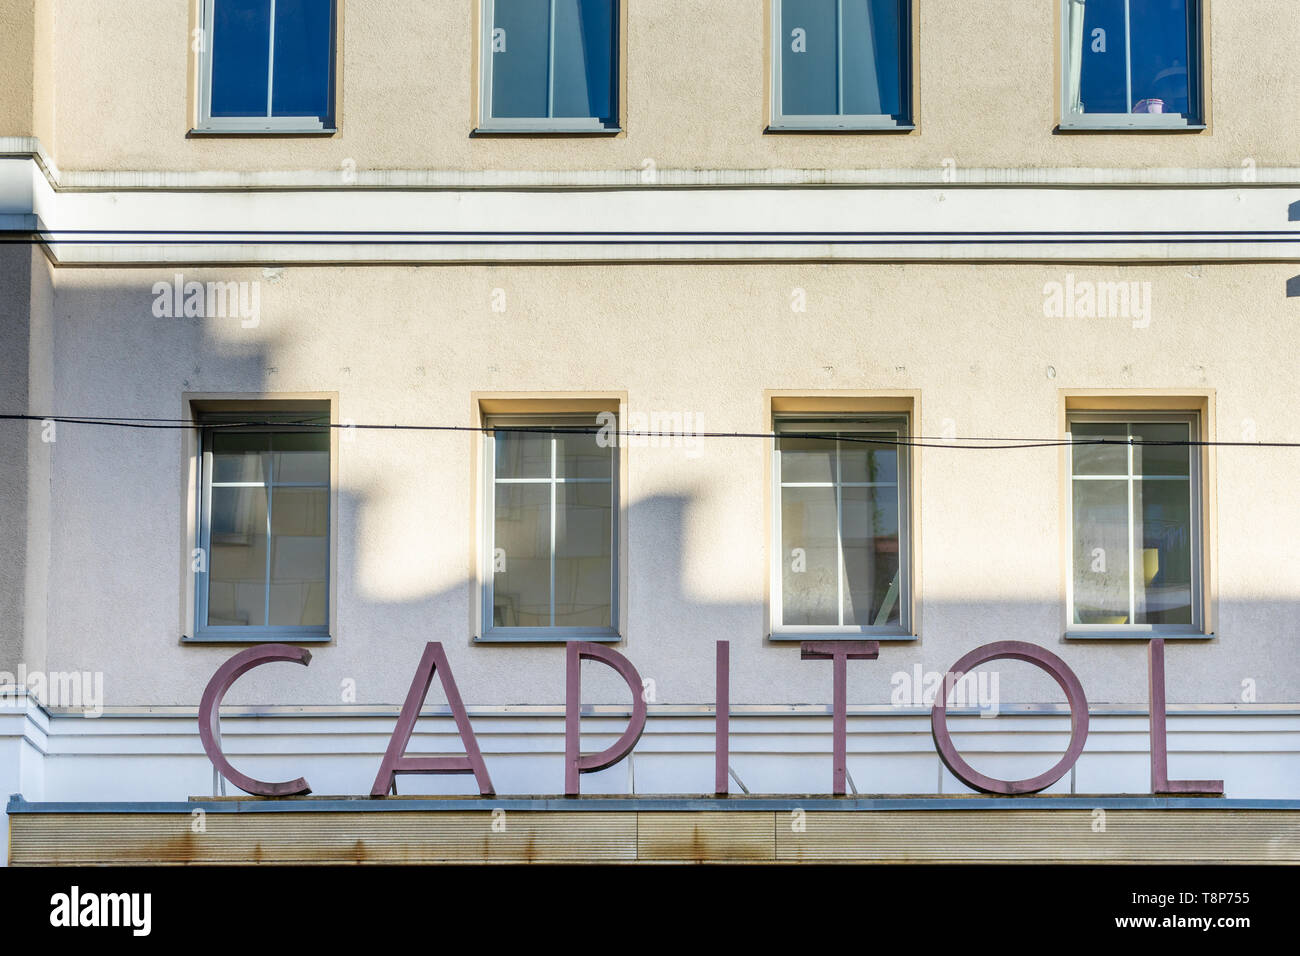 Capitol in Berlin Adlershof - a former cinema from 1918 - 1990, Berlin Treptow, Germany Stock Photo